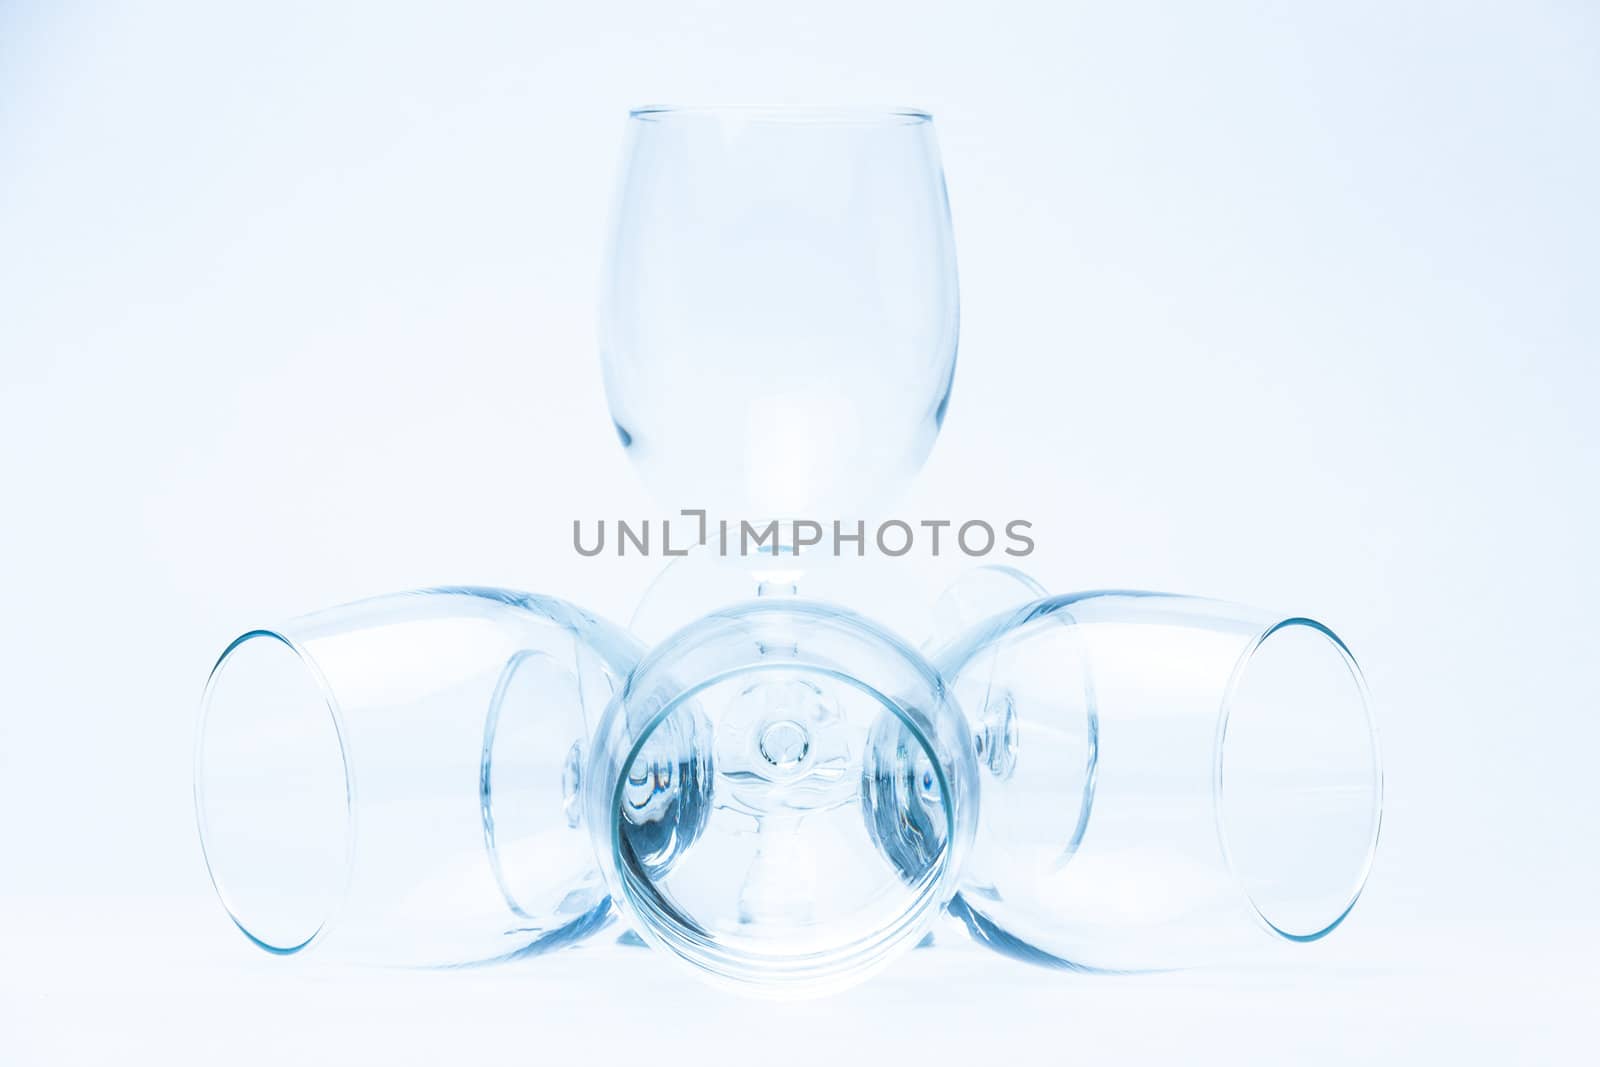 Wine glasses stand and lie symmetrically on white by vitmihailov